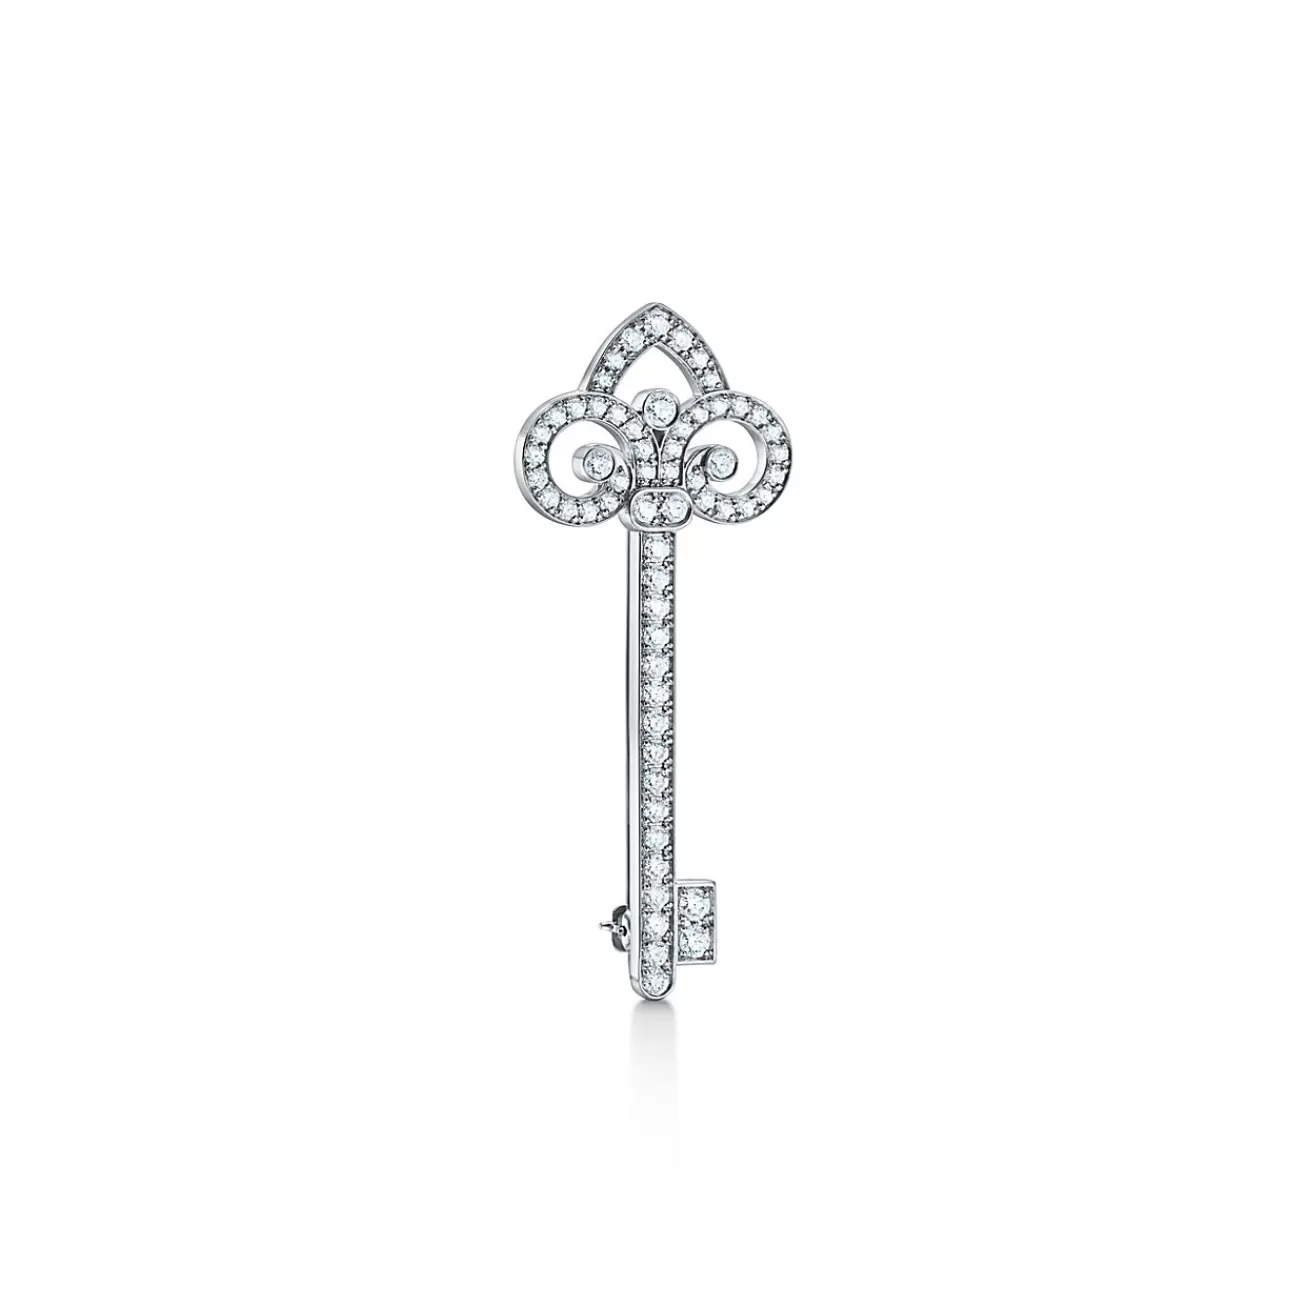 Tiffany & Co. Tiffany Keys Fleur de Lis Key Brooch in Platinum with Diamonds | ^ Brooches | Platinum Jewelry